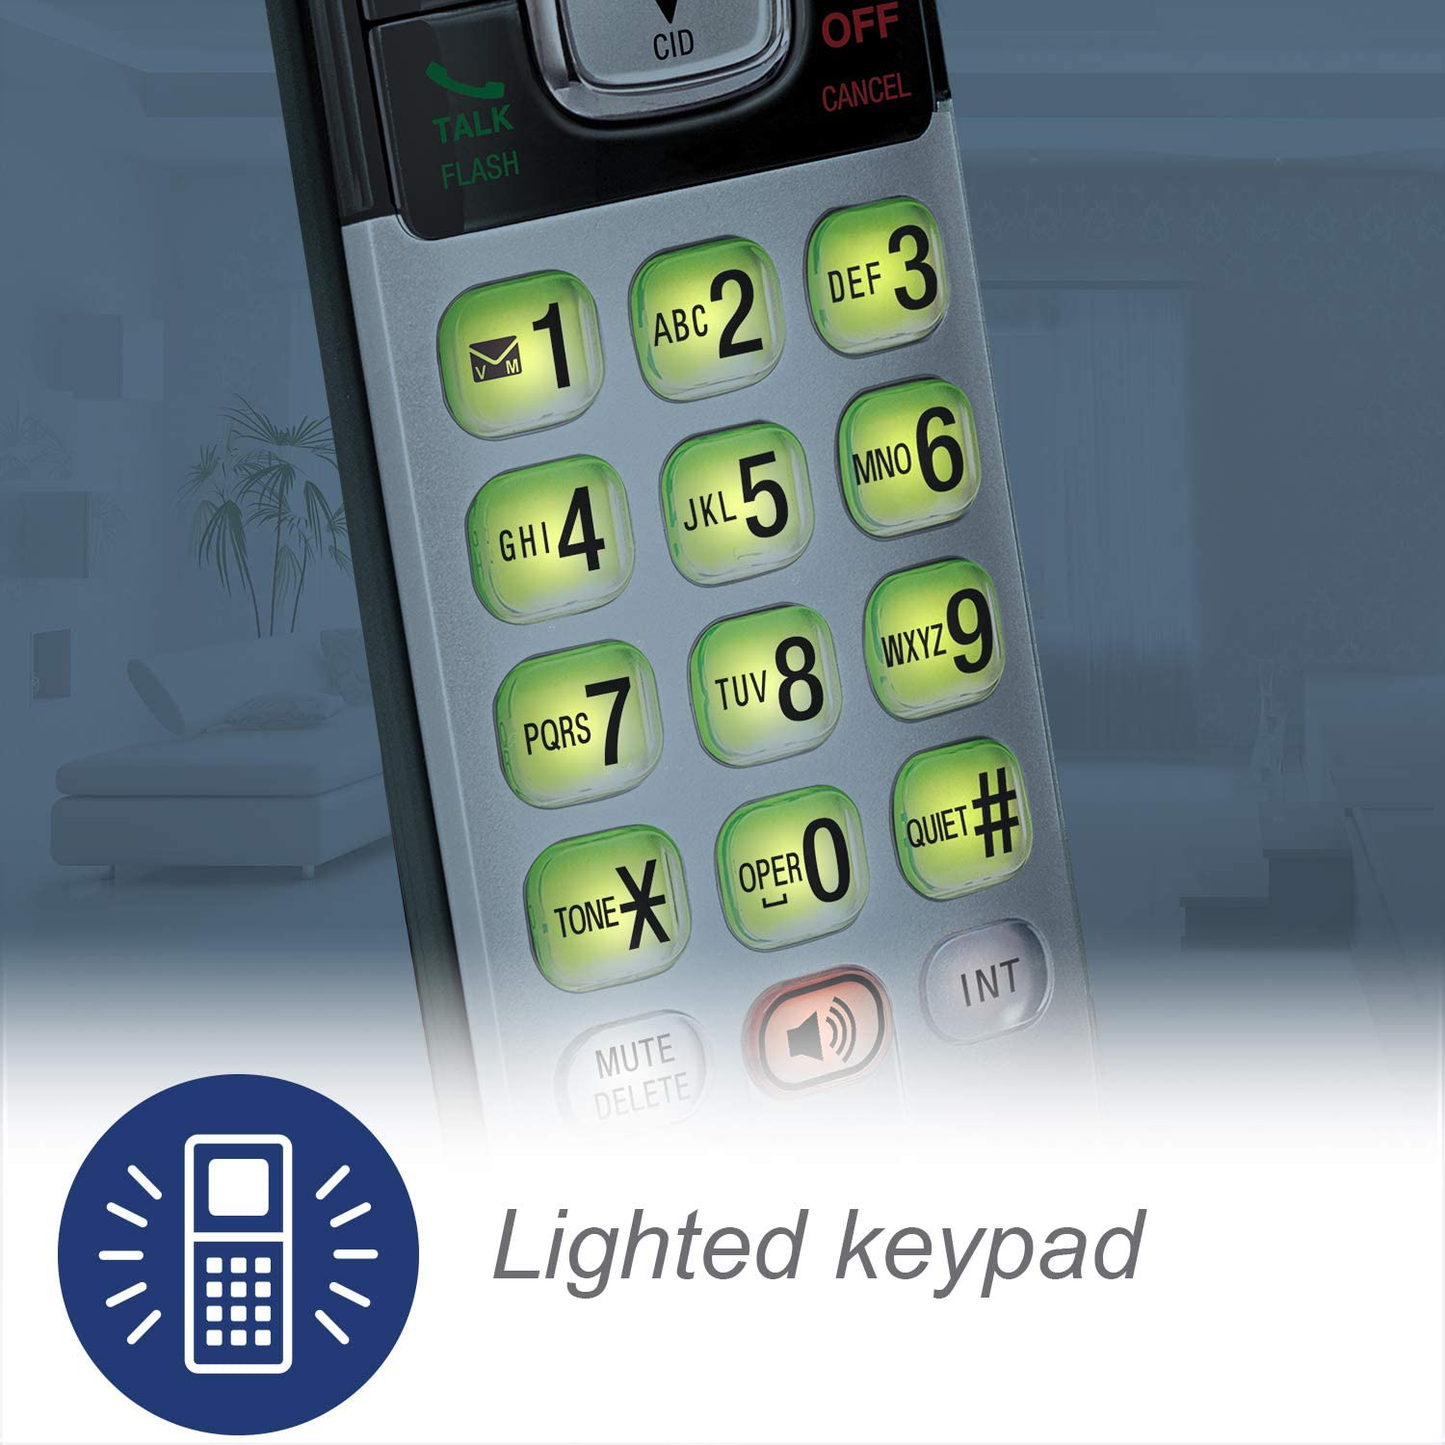 VTech CS6719-15 DECT 6.0 Phone with Caller ID/Call Waiting, 1 Cordless Handset